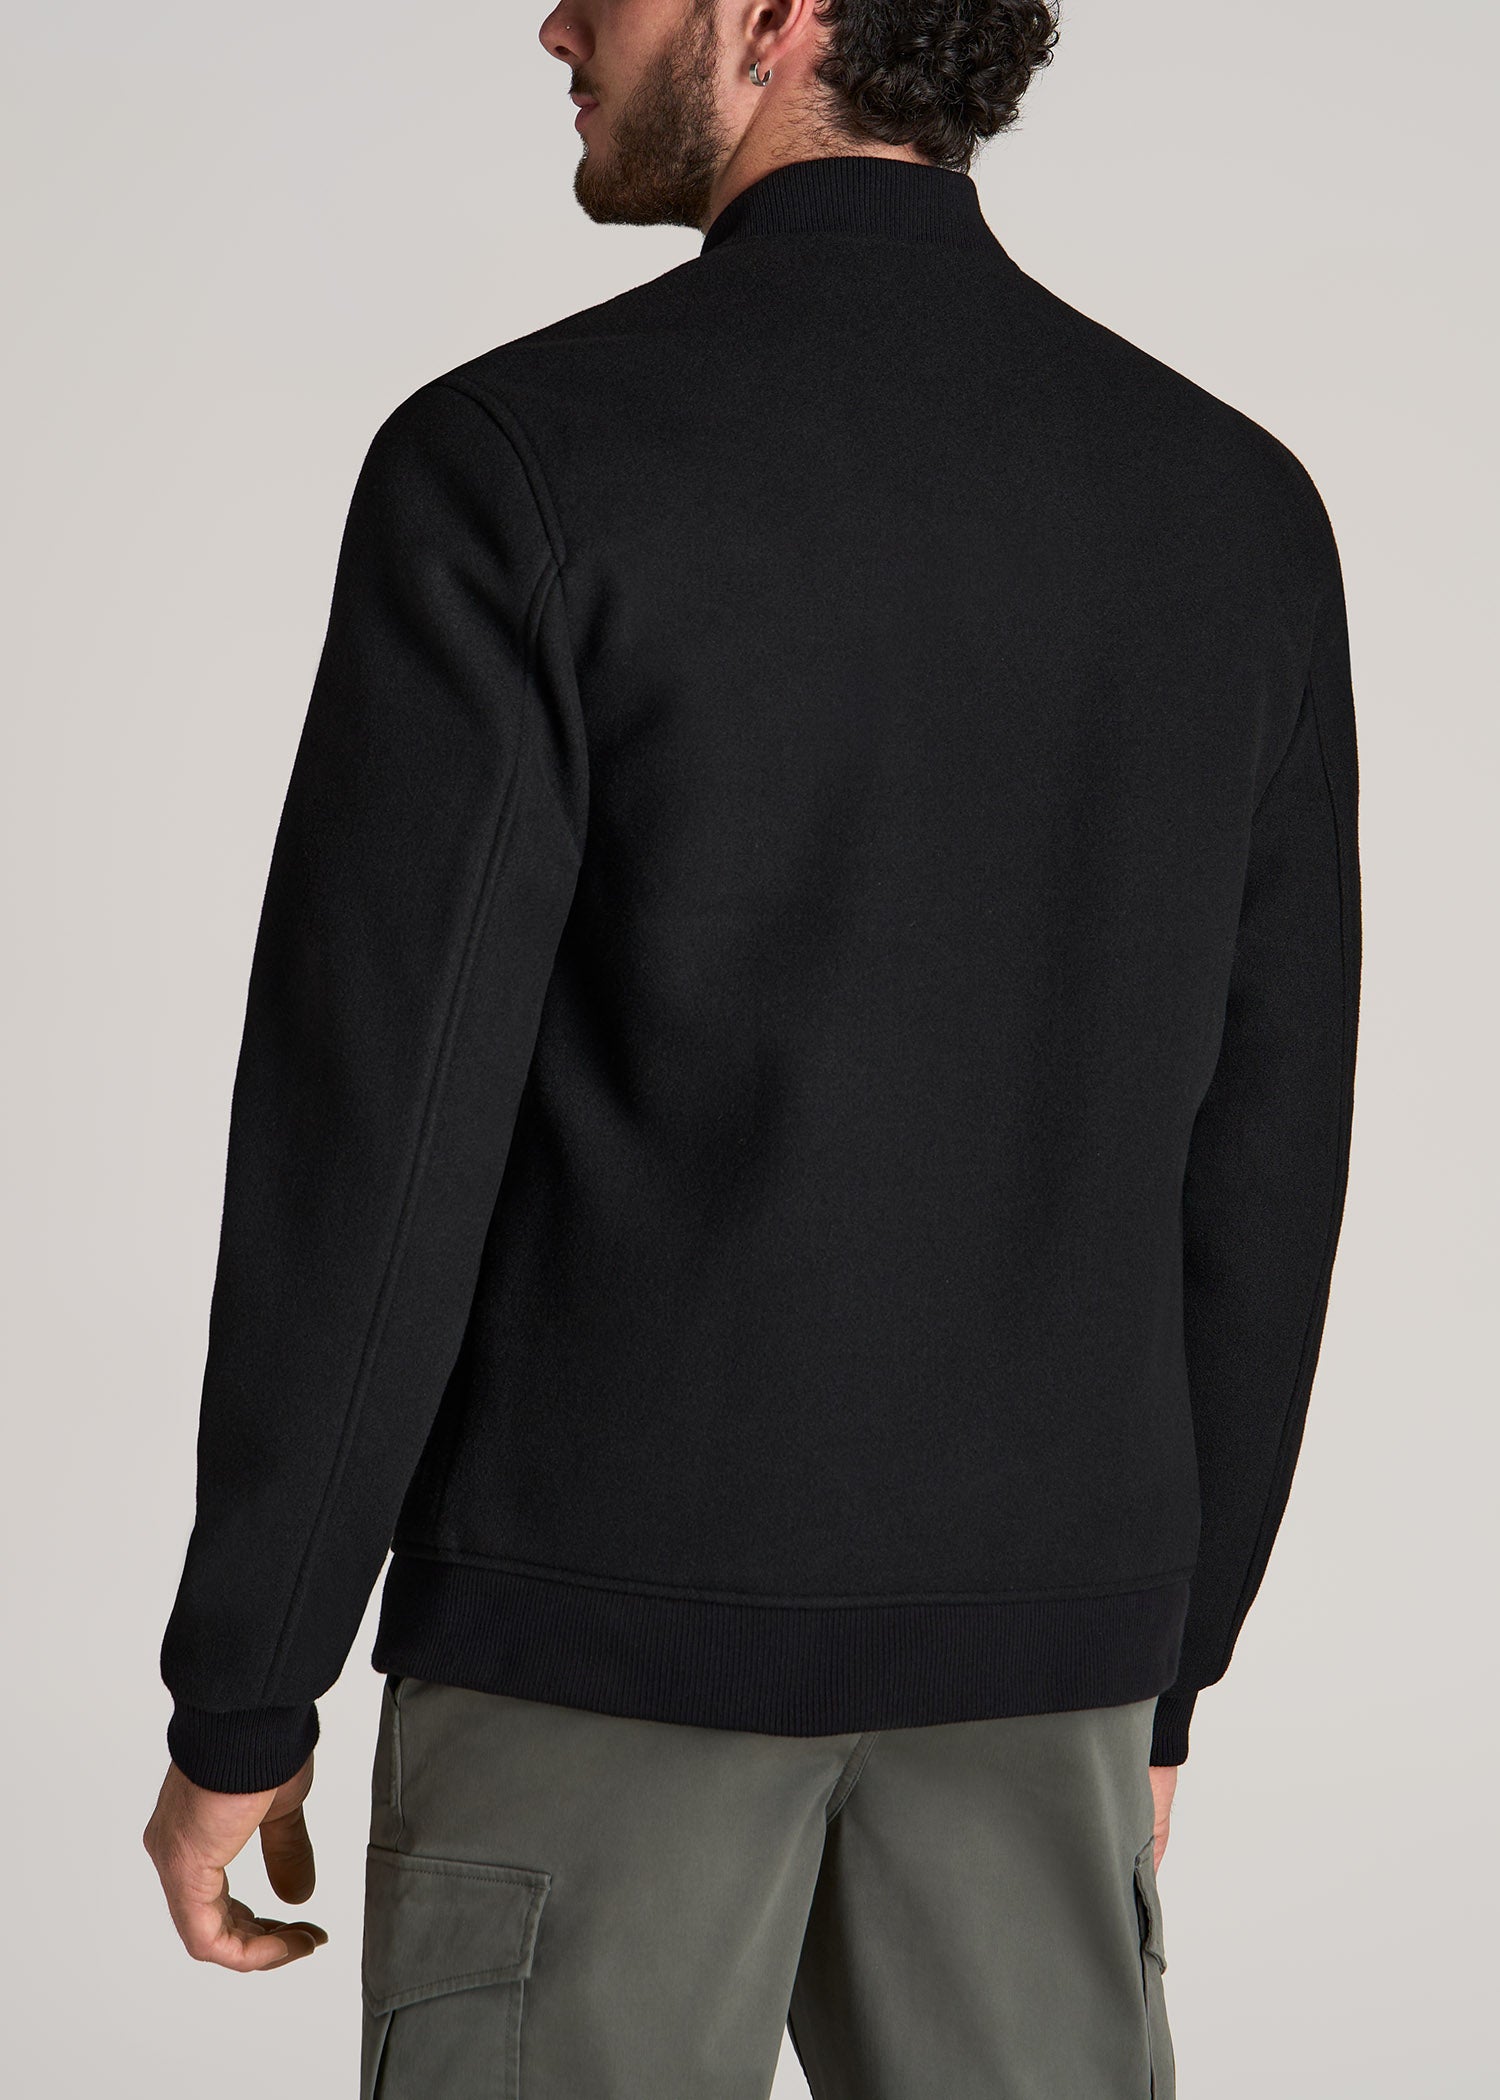 Melton Varsity Jacket for Tall Men in Black